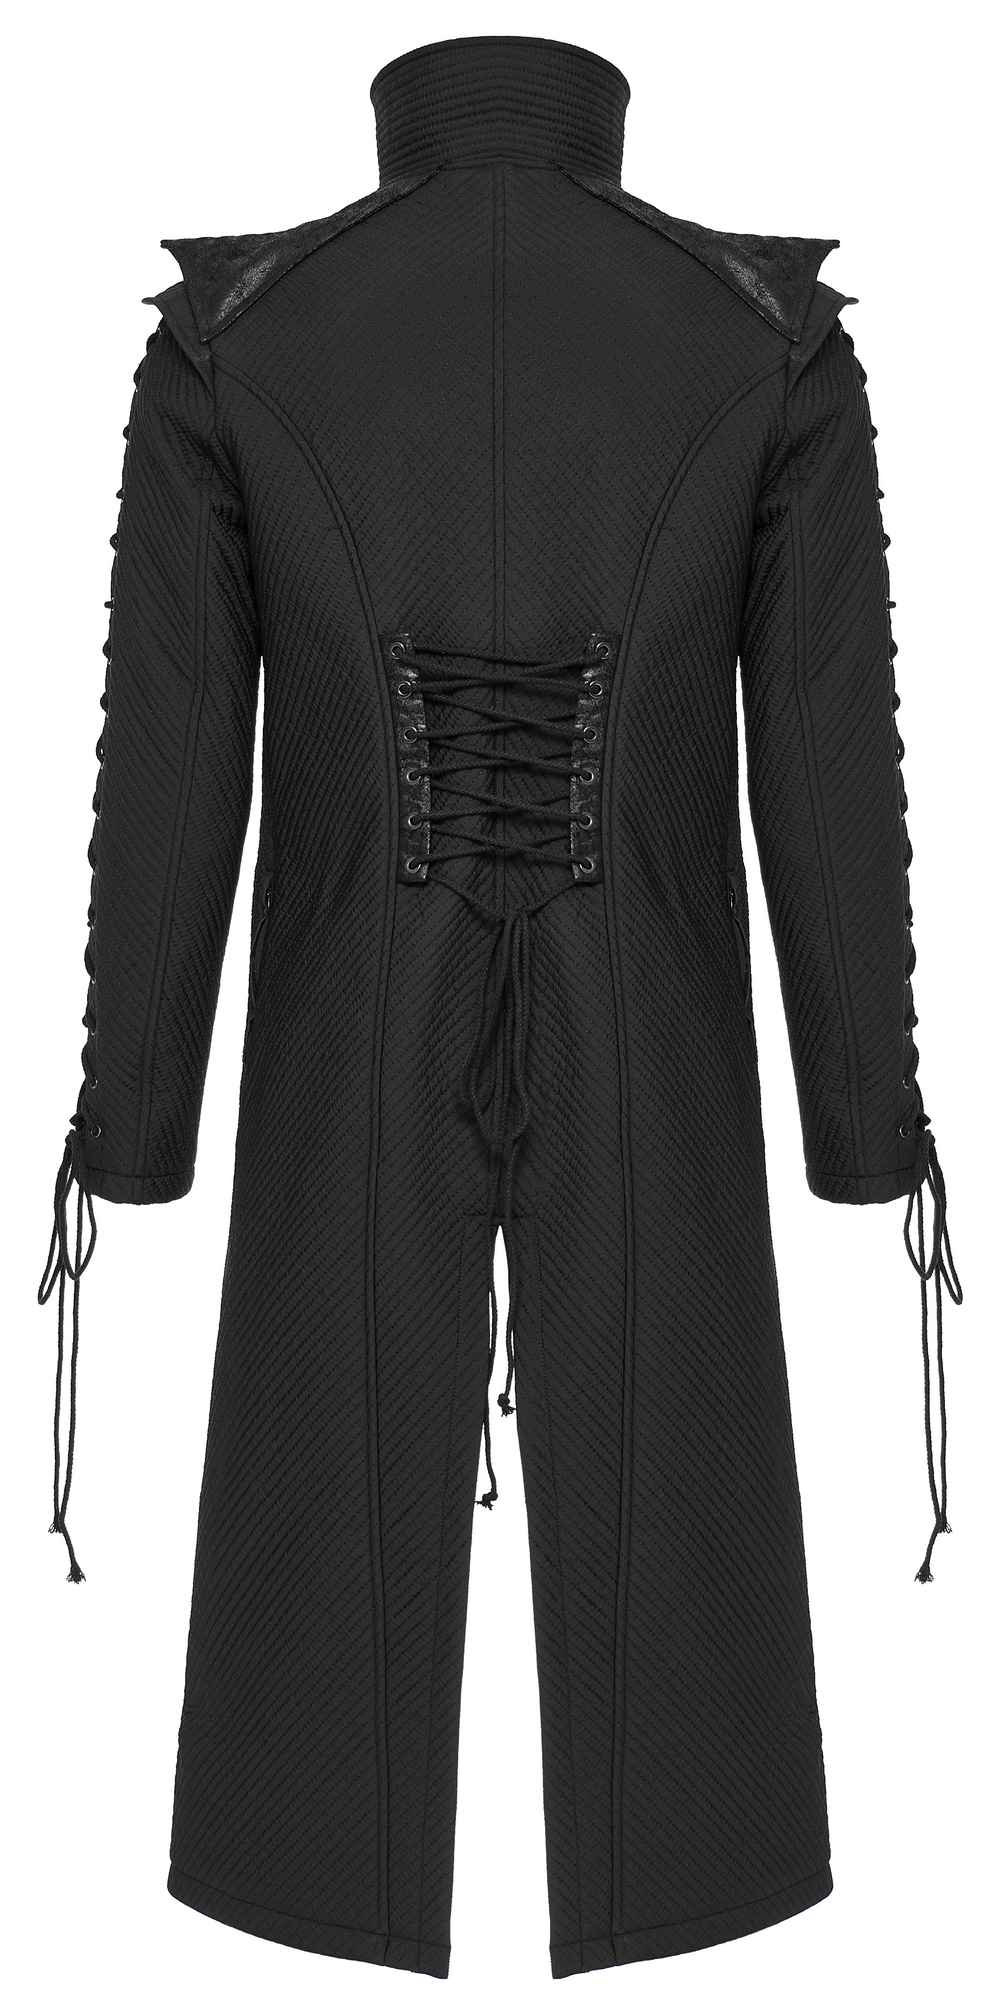 Men's Gothic Long Coat with Rivet Details - HARD'N'HEAVY